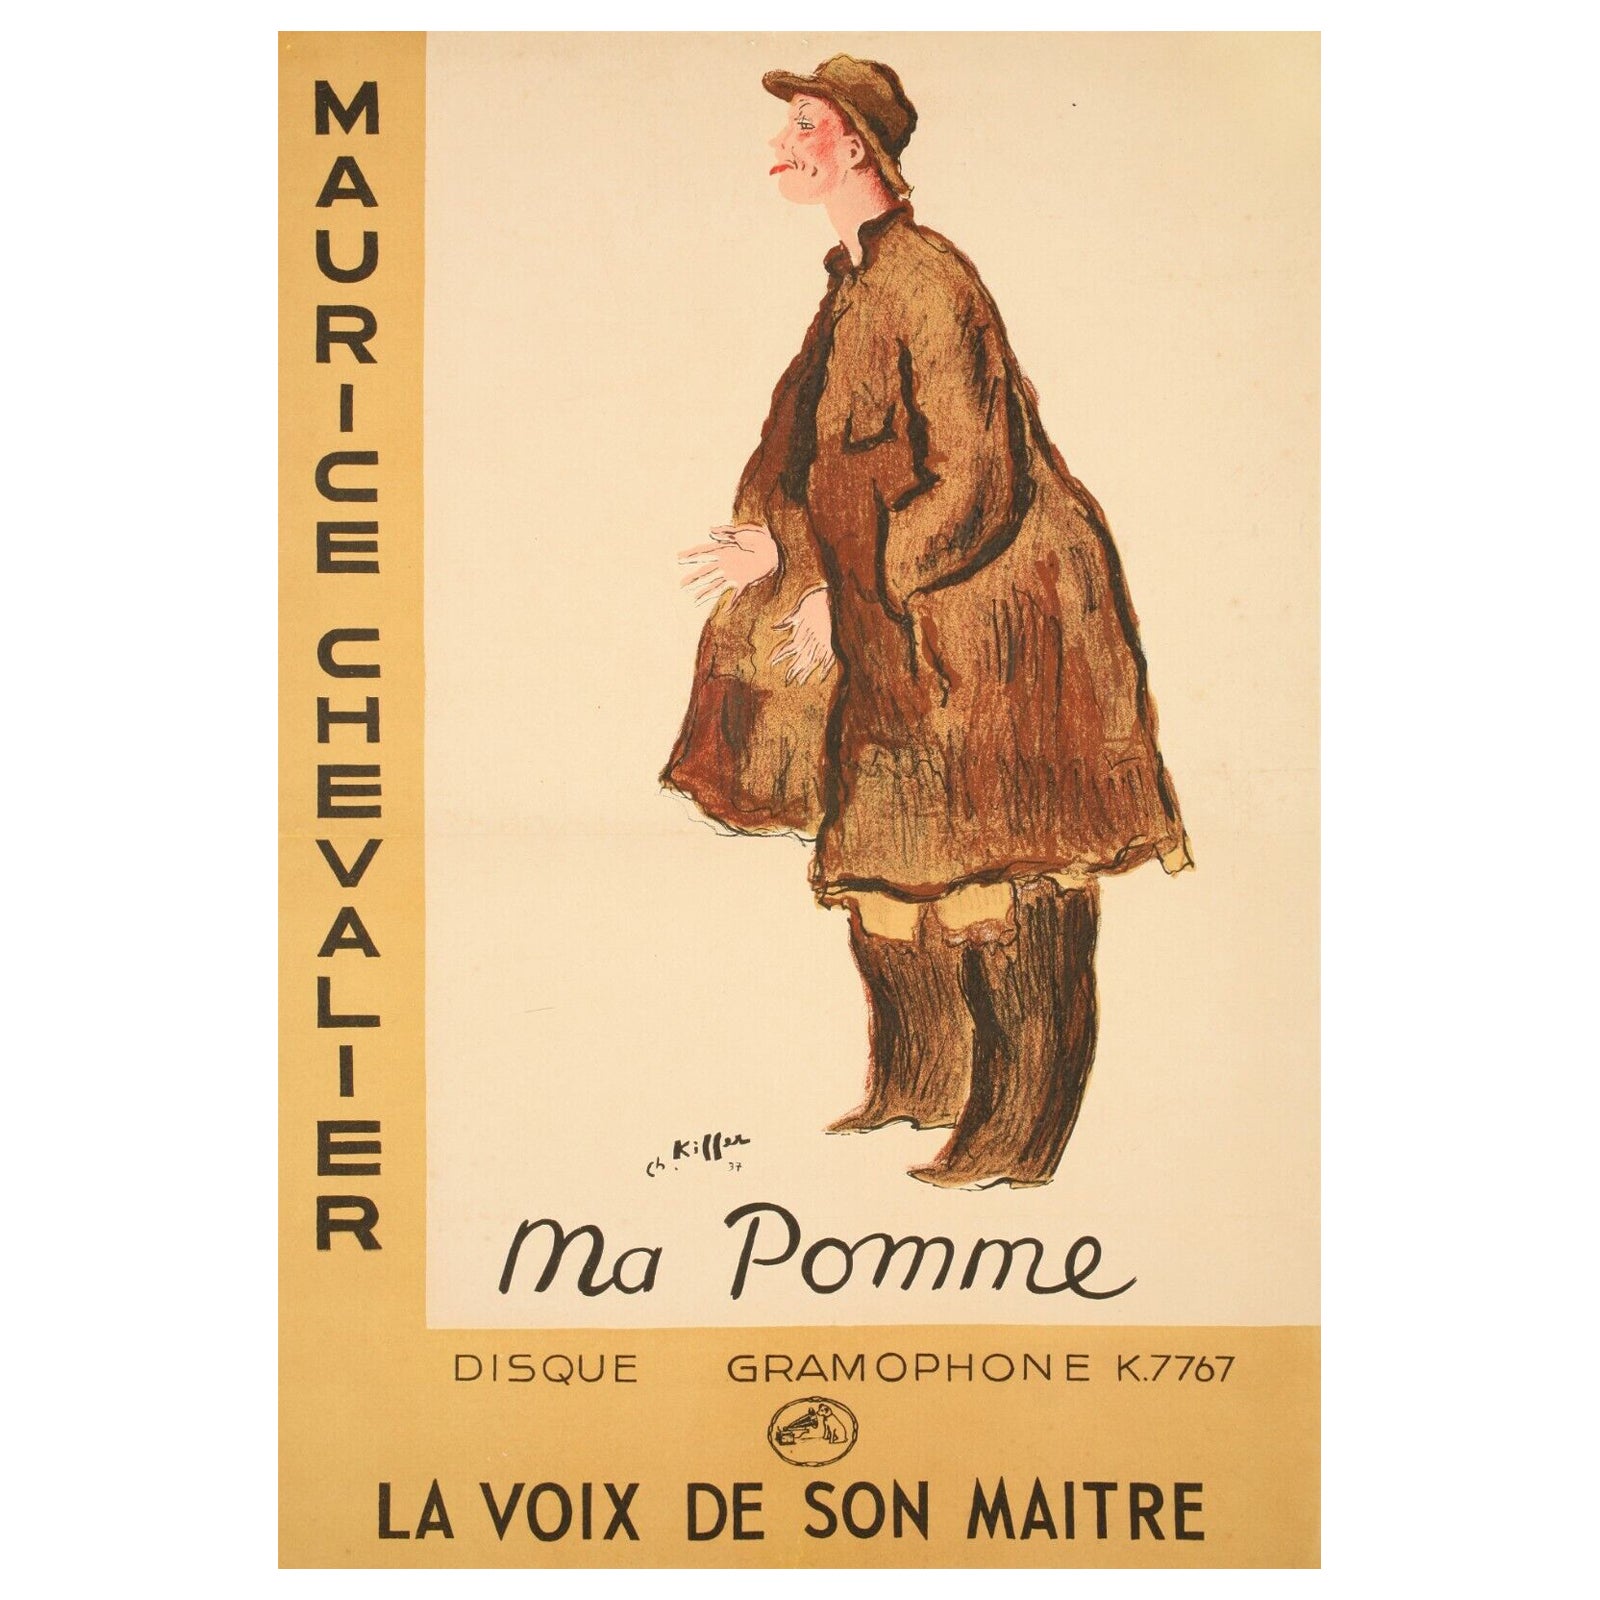 Original Art Deco Poster-Charles Kiffer-Maurice Chevalier-My Apple, 1937